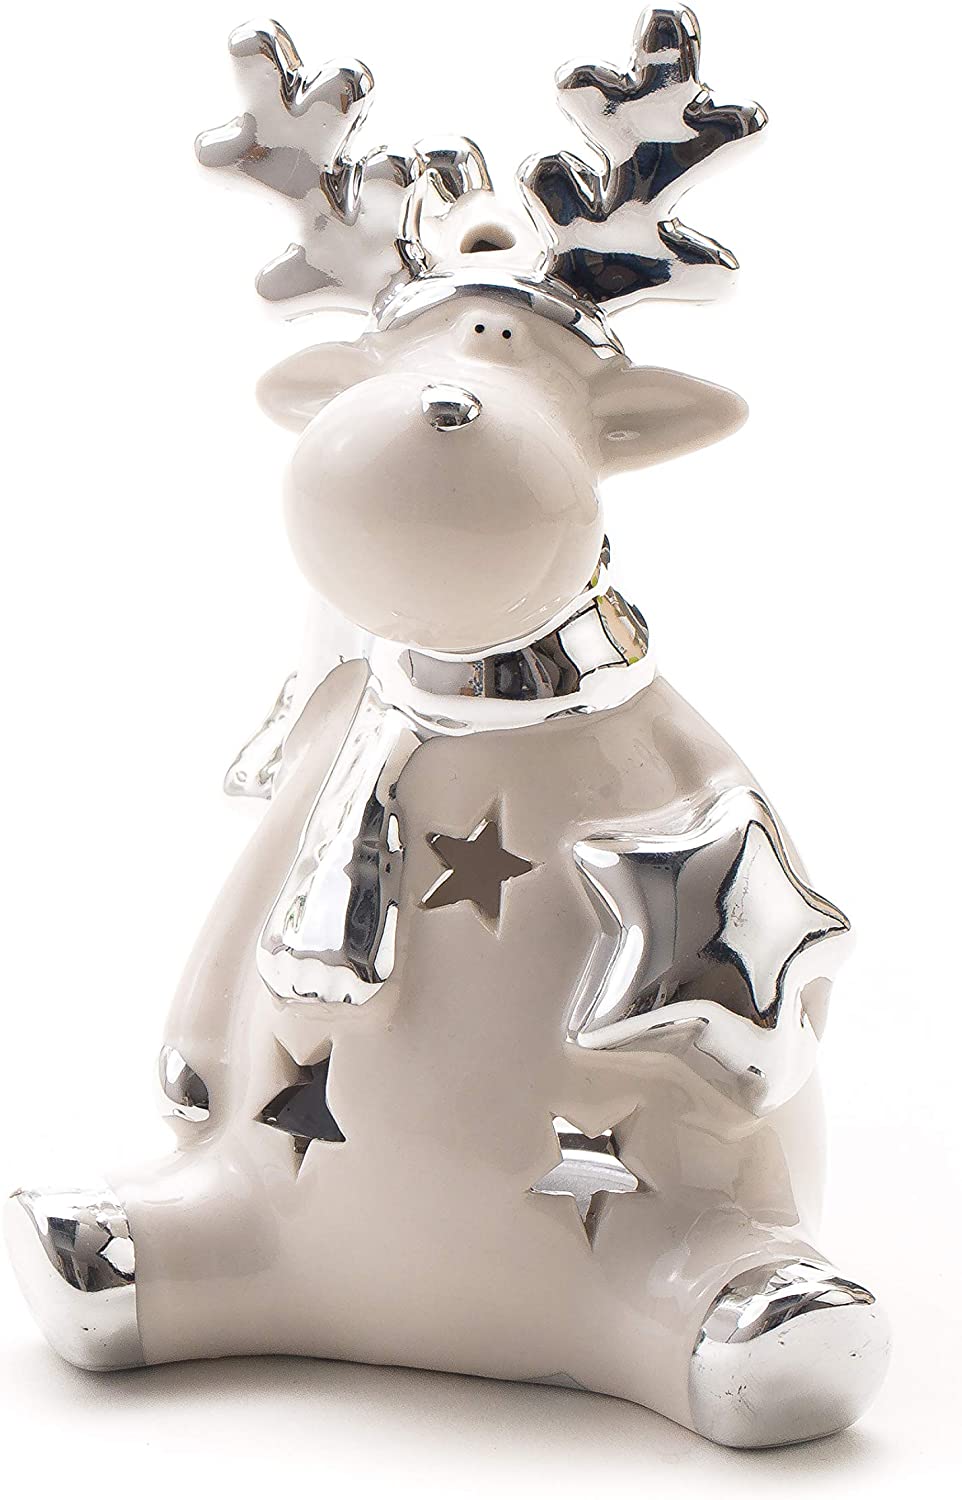 DARO DEKO Daro Decorative Ceramic Reindeer Tea Light Holder Silver White 11 x 15.5 cm - Single or Set of 2